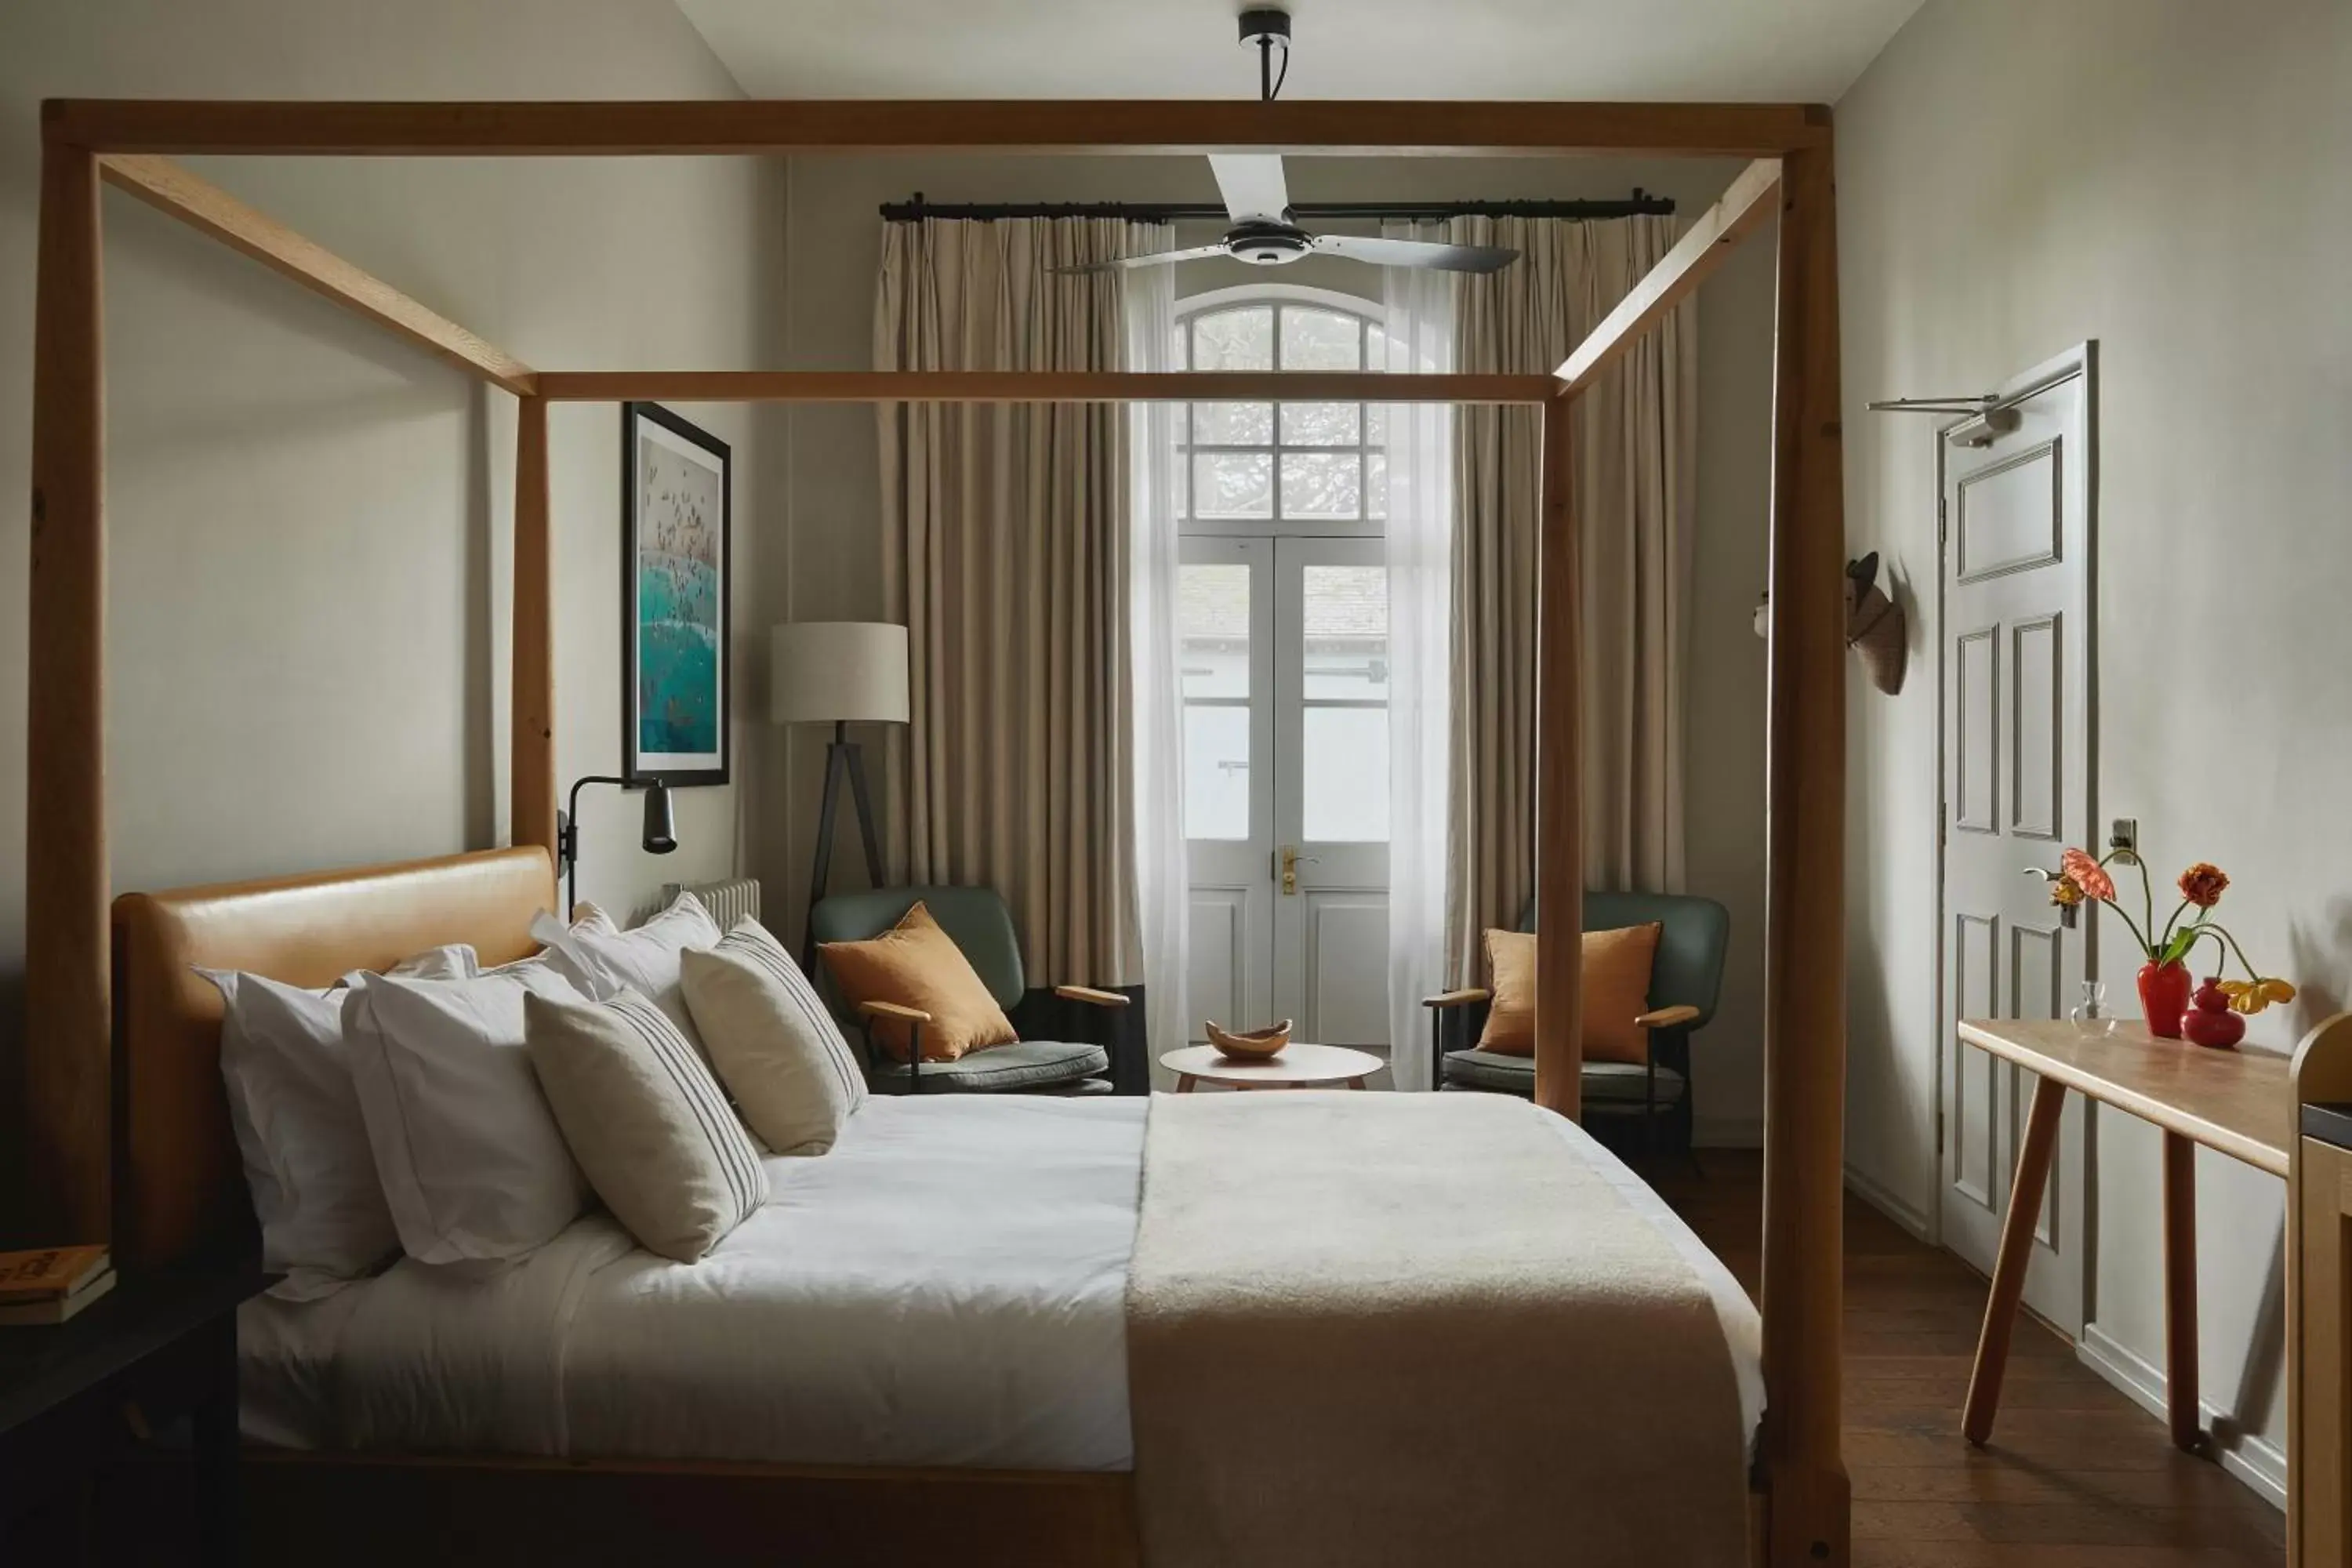 Bedroom in Fowey Hall - A Luxury Family Hotel